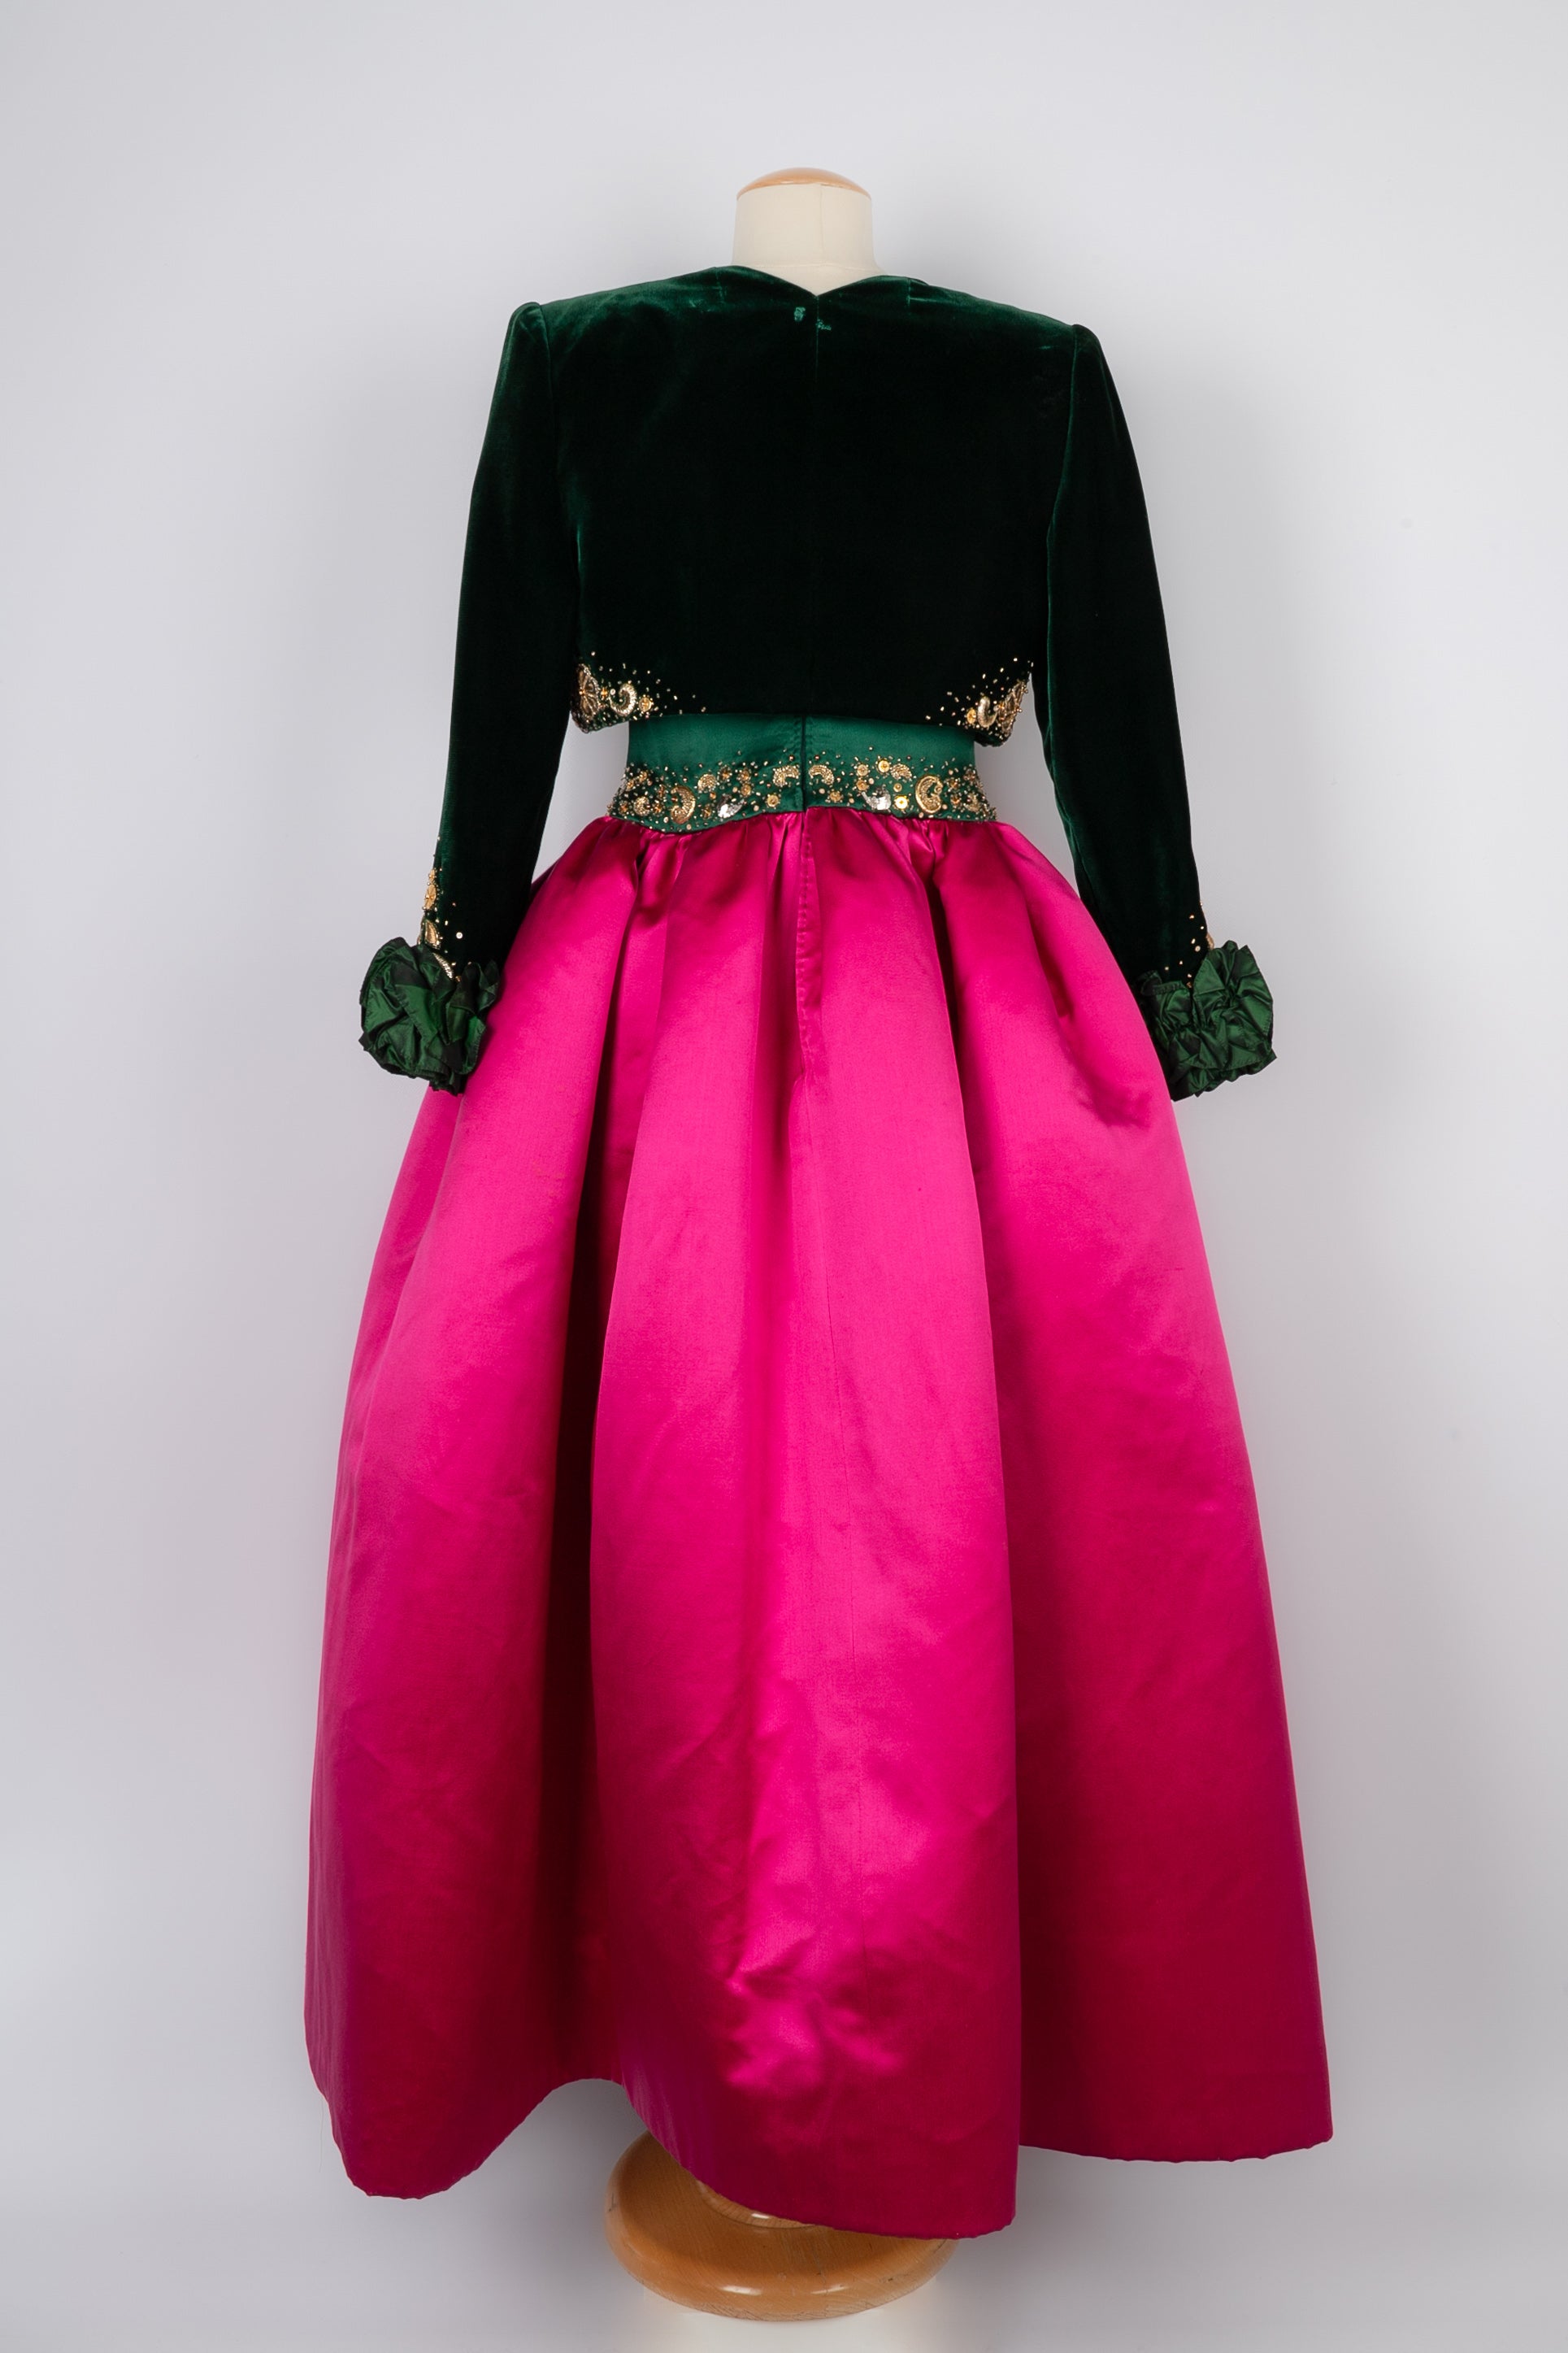 Robe Nina Ricci Haute Couture 1991/1992